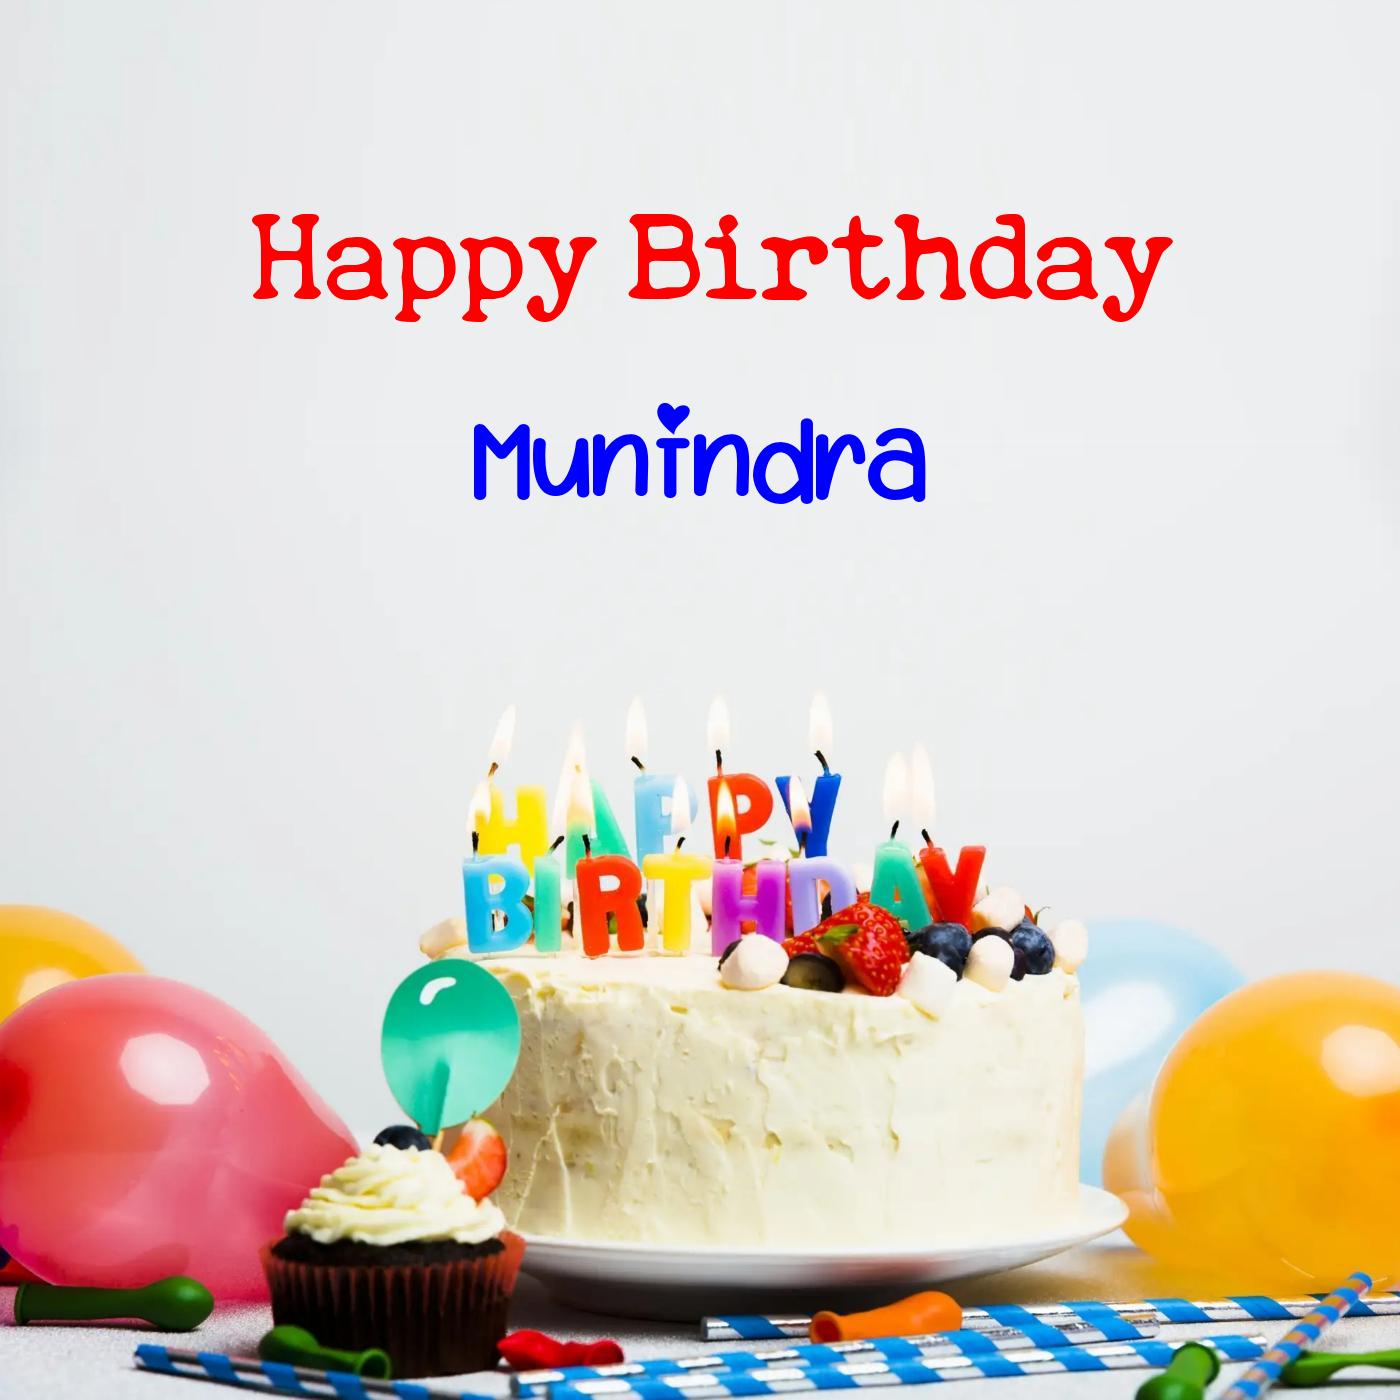 Happy Birthday Munindra Cake Balloons Card